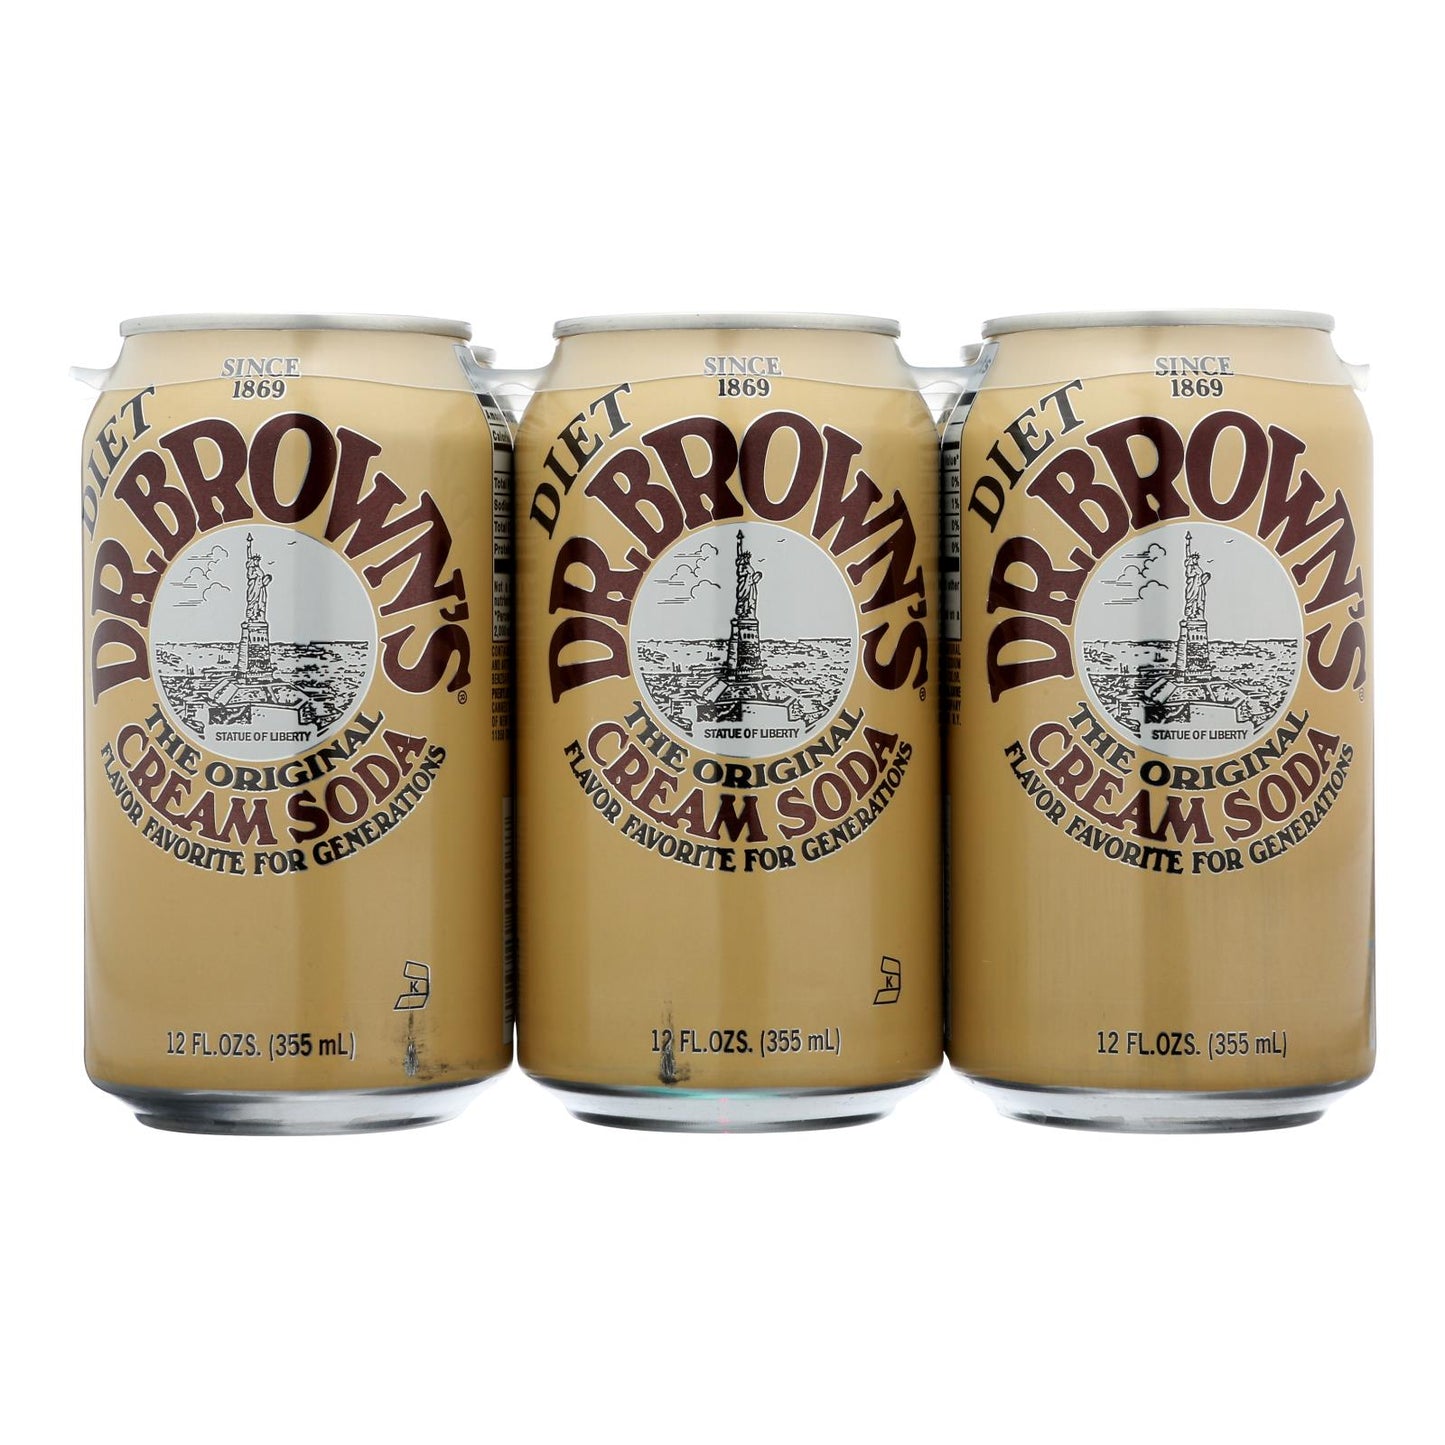 Dr. Brown Dr Brown's, The Original Diet Cream Soda - Case Of 4 - 6/12 Fz